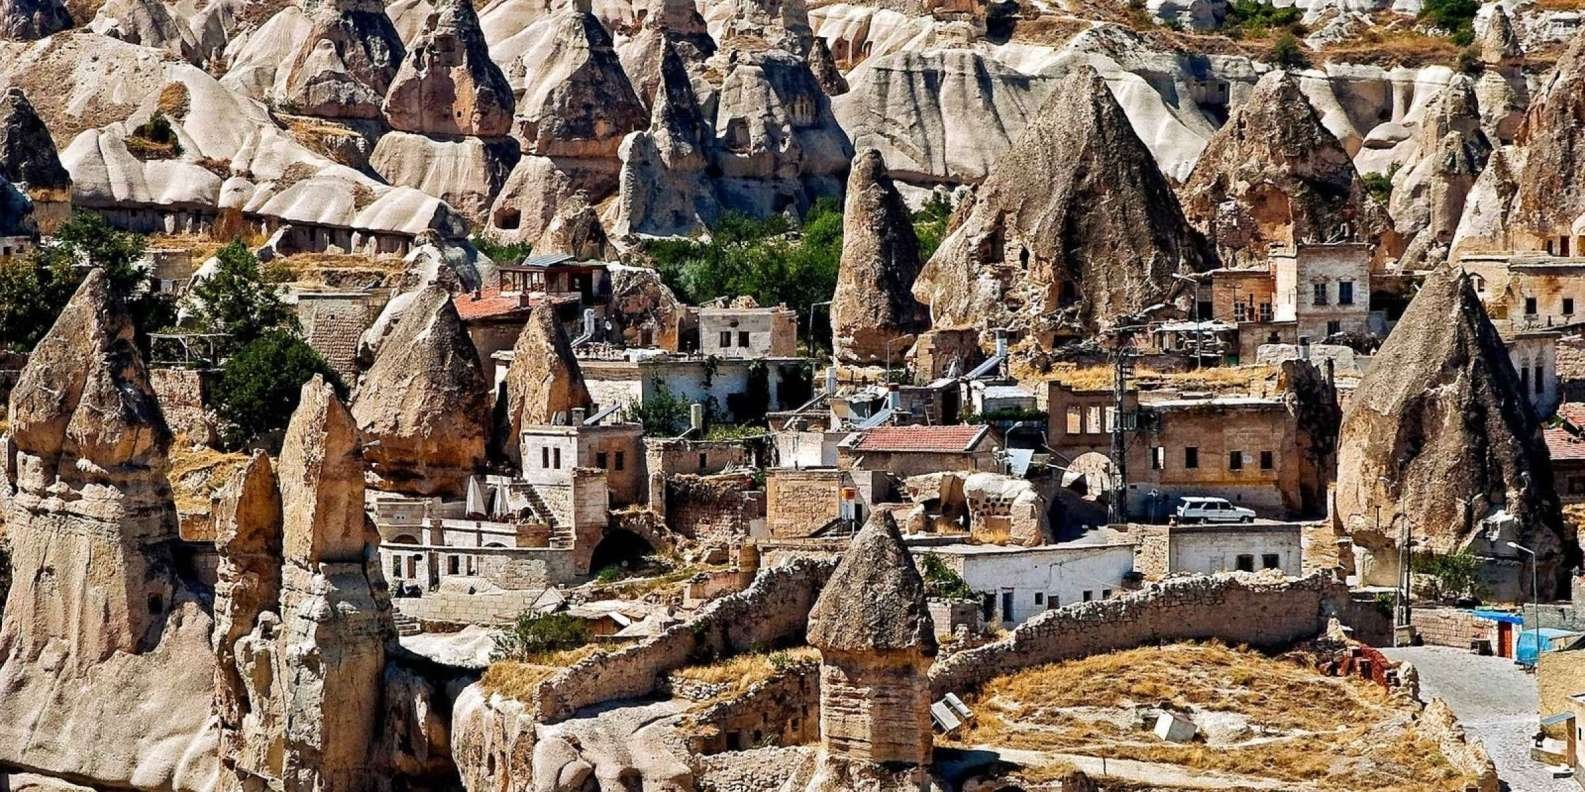 "Soğanlı Valley" to be opened to tourism: Governor